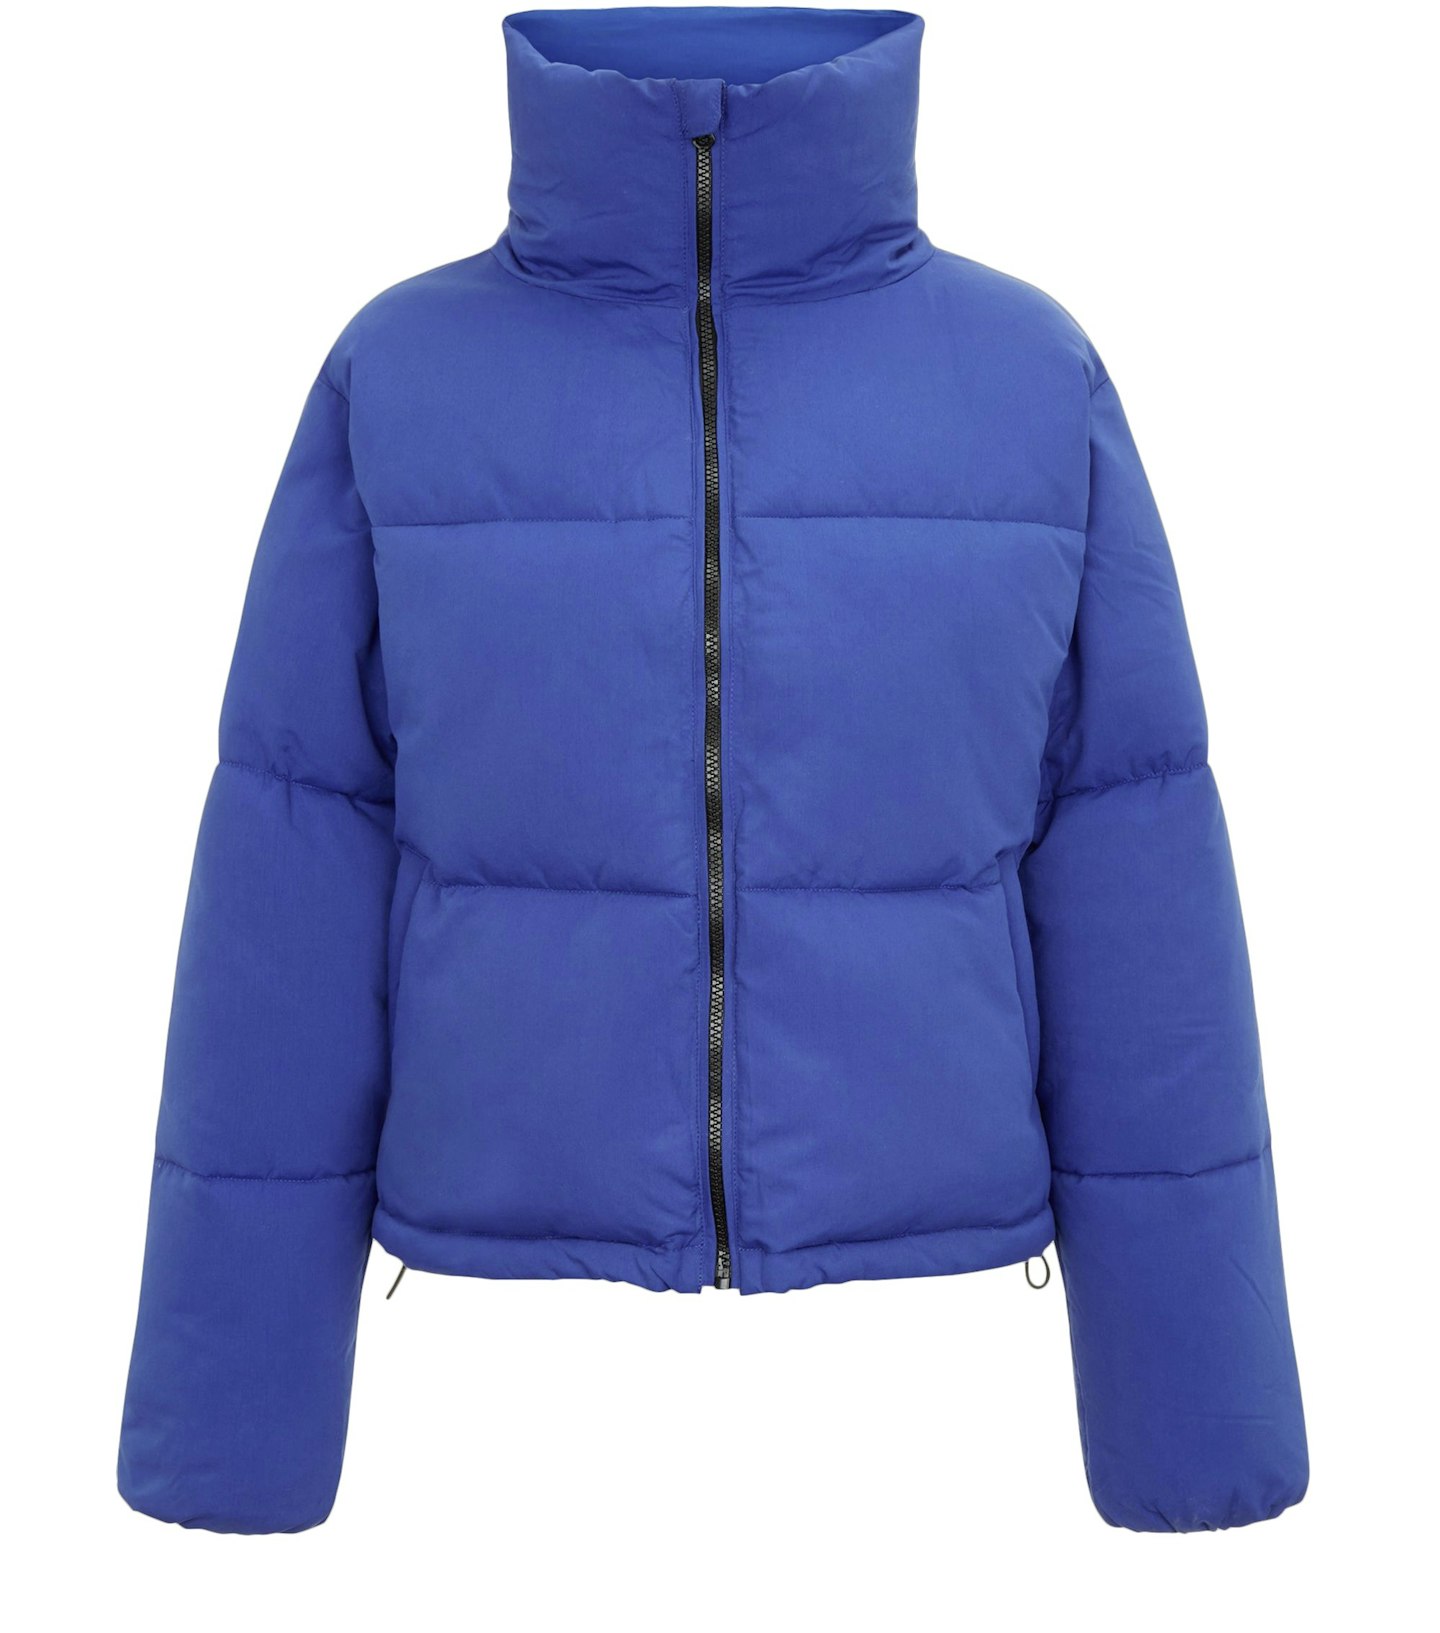 Blue puffer jacket, New Look